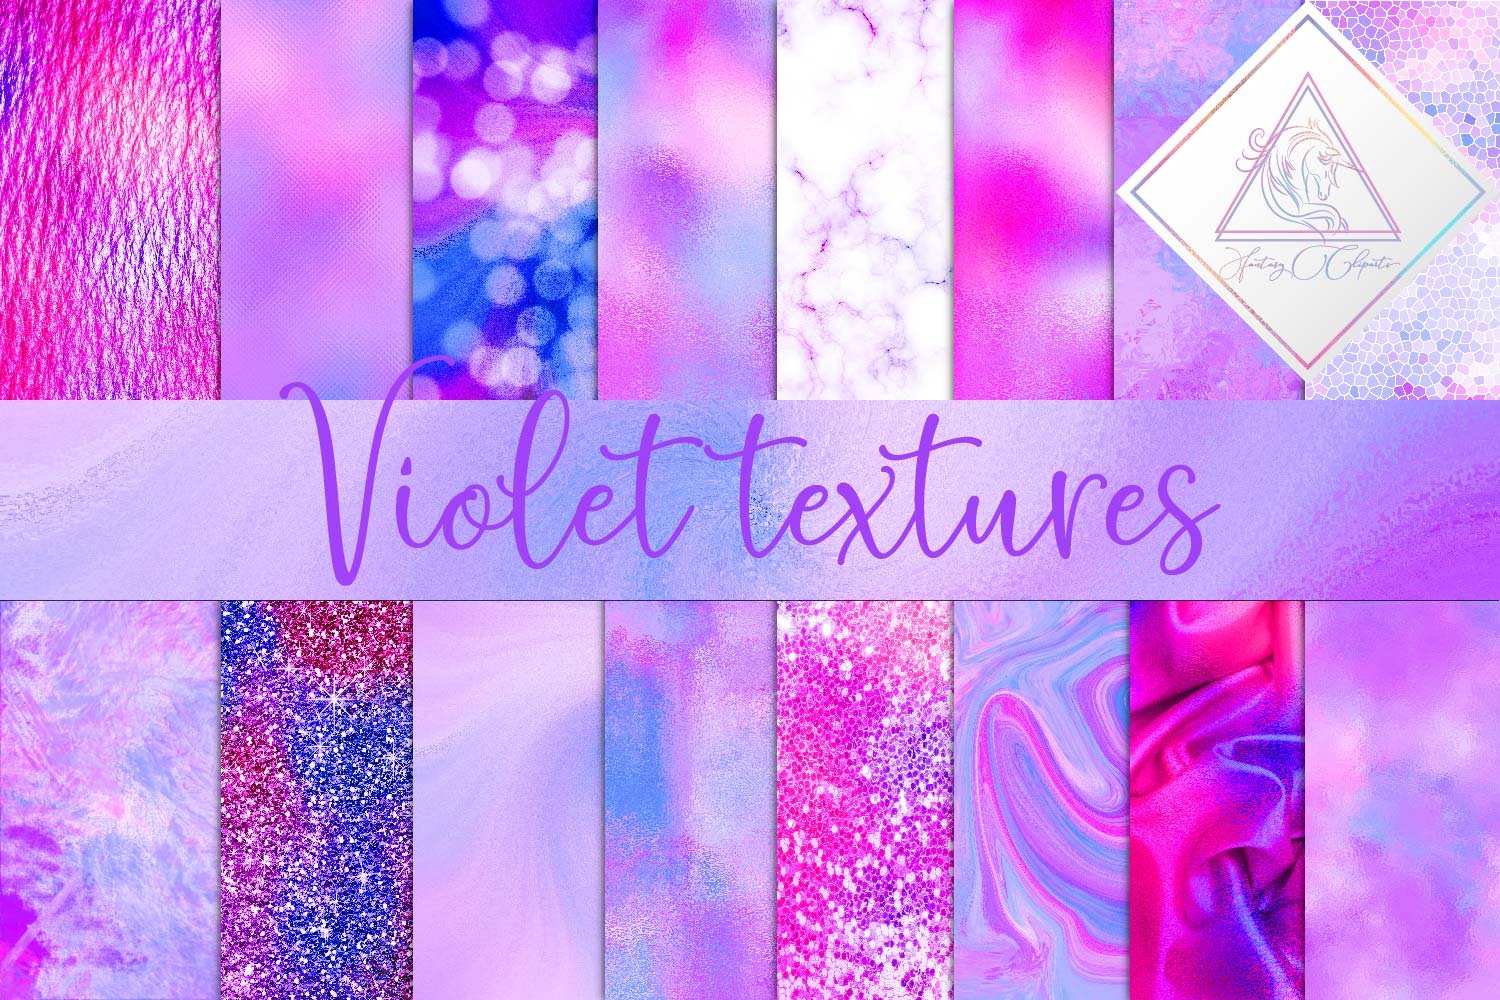 Violet textures digital paper cover image.